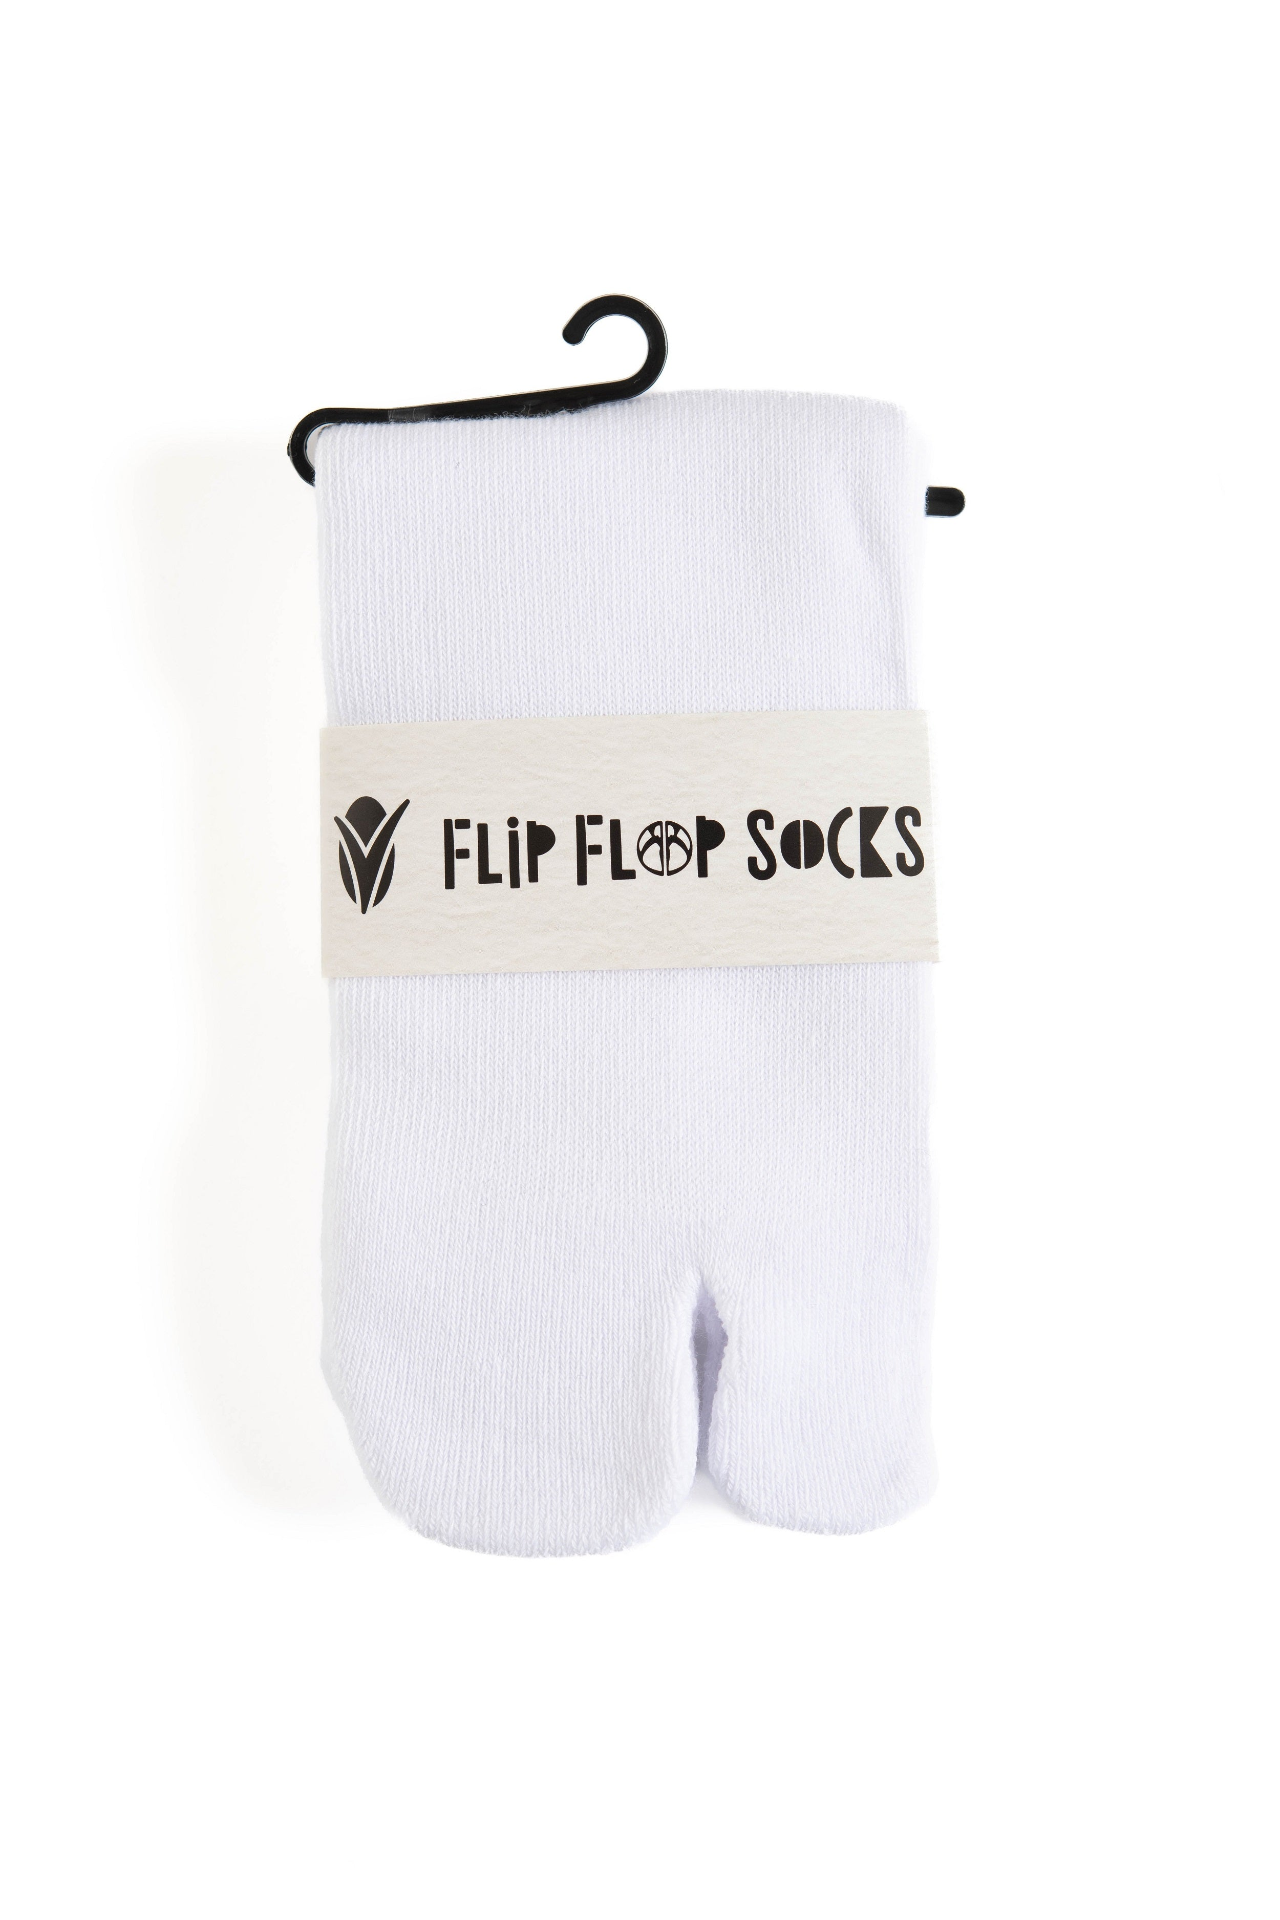 Mini-Crew - V-Toe Thicker Flip-Flop Tabi Socks Athletic or Casual White Cotton Blend Comfortable Stylish